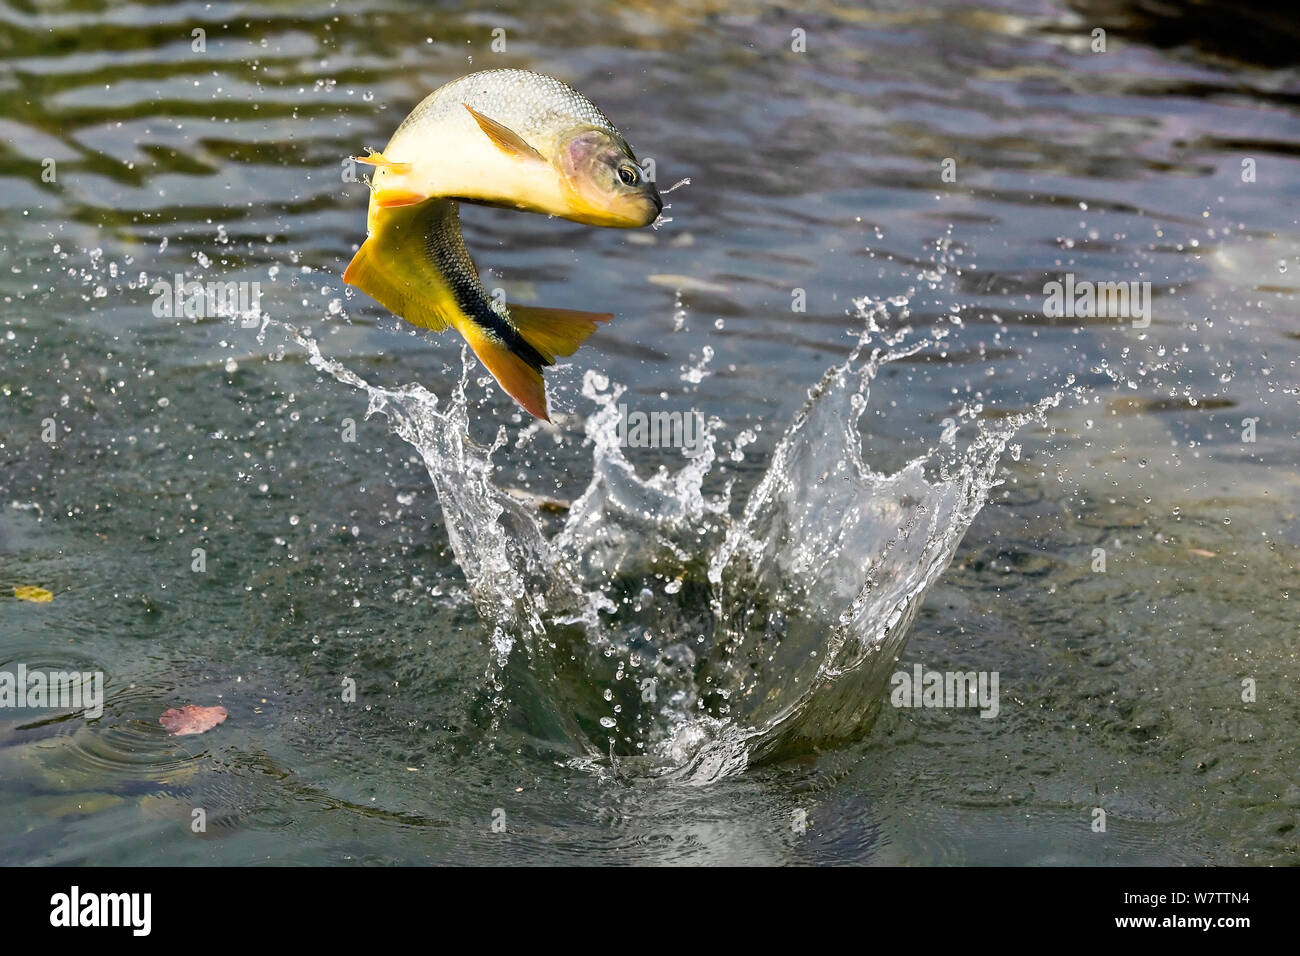 Piraputanga (poecilia hilarii) Fische springen Insekten zu fangen. Bonito, Mato Grosso do Sul, Brasilien Stockfoto